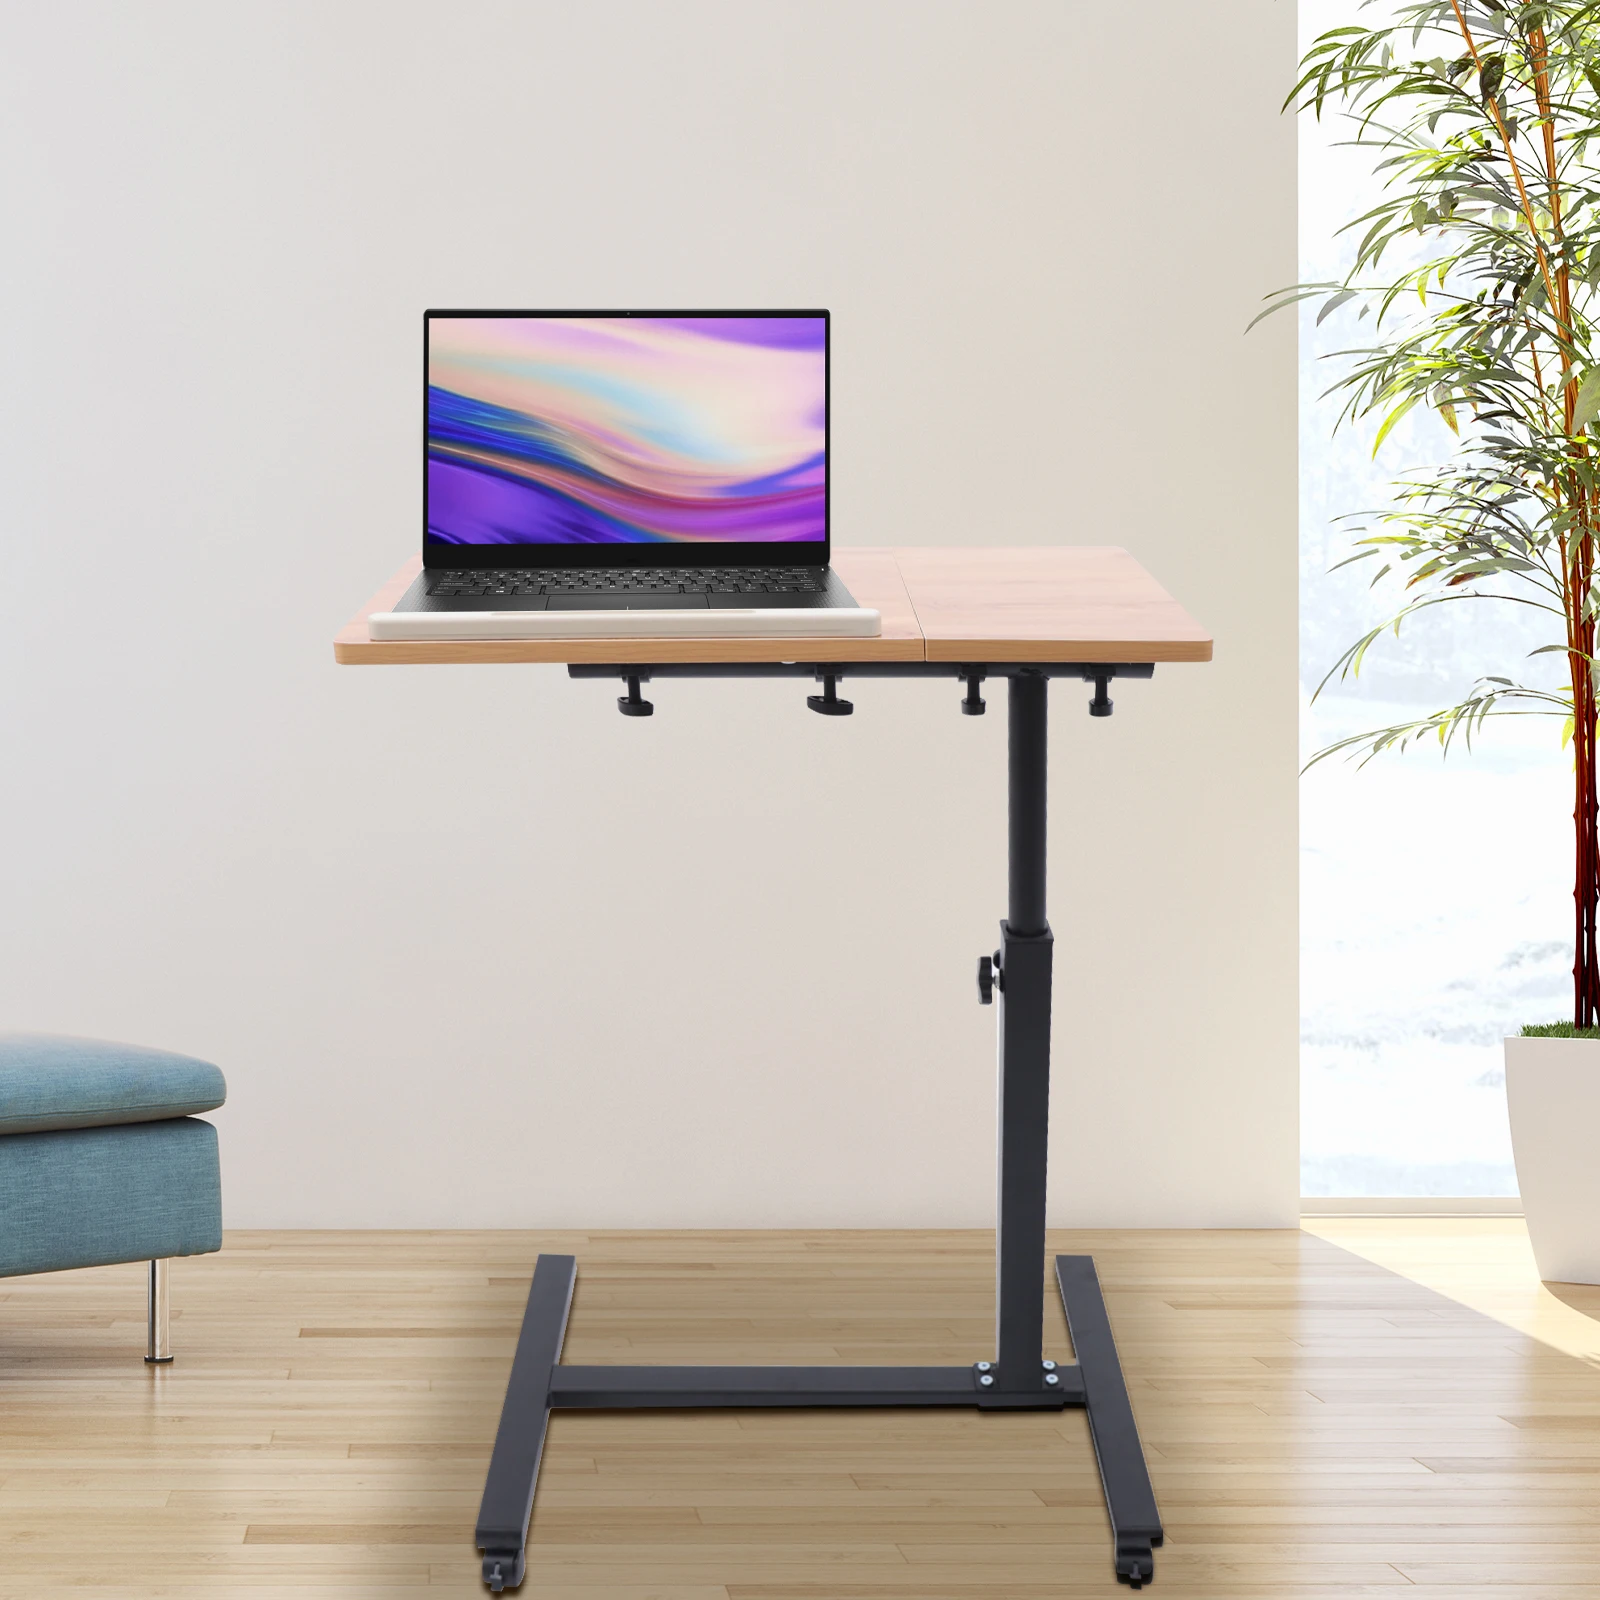 Portable Mobile Lift Computer Folding Desk Study Table Height Adjustable Computer Desk Lap Bed Tray Bed Desk Work Furniture